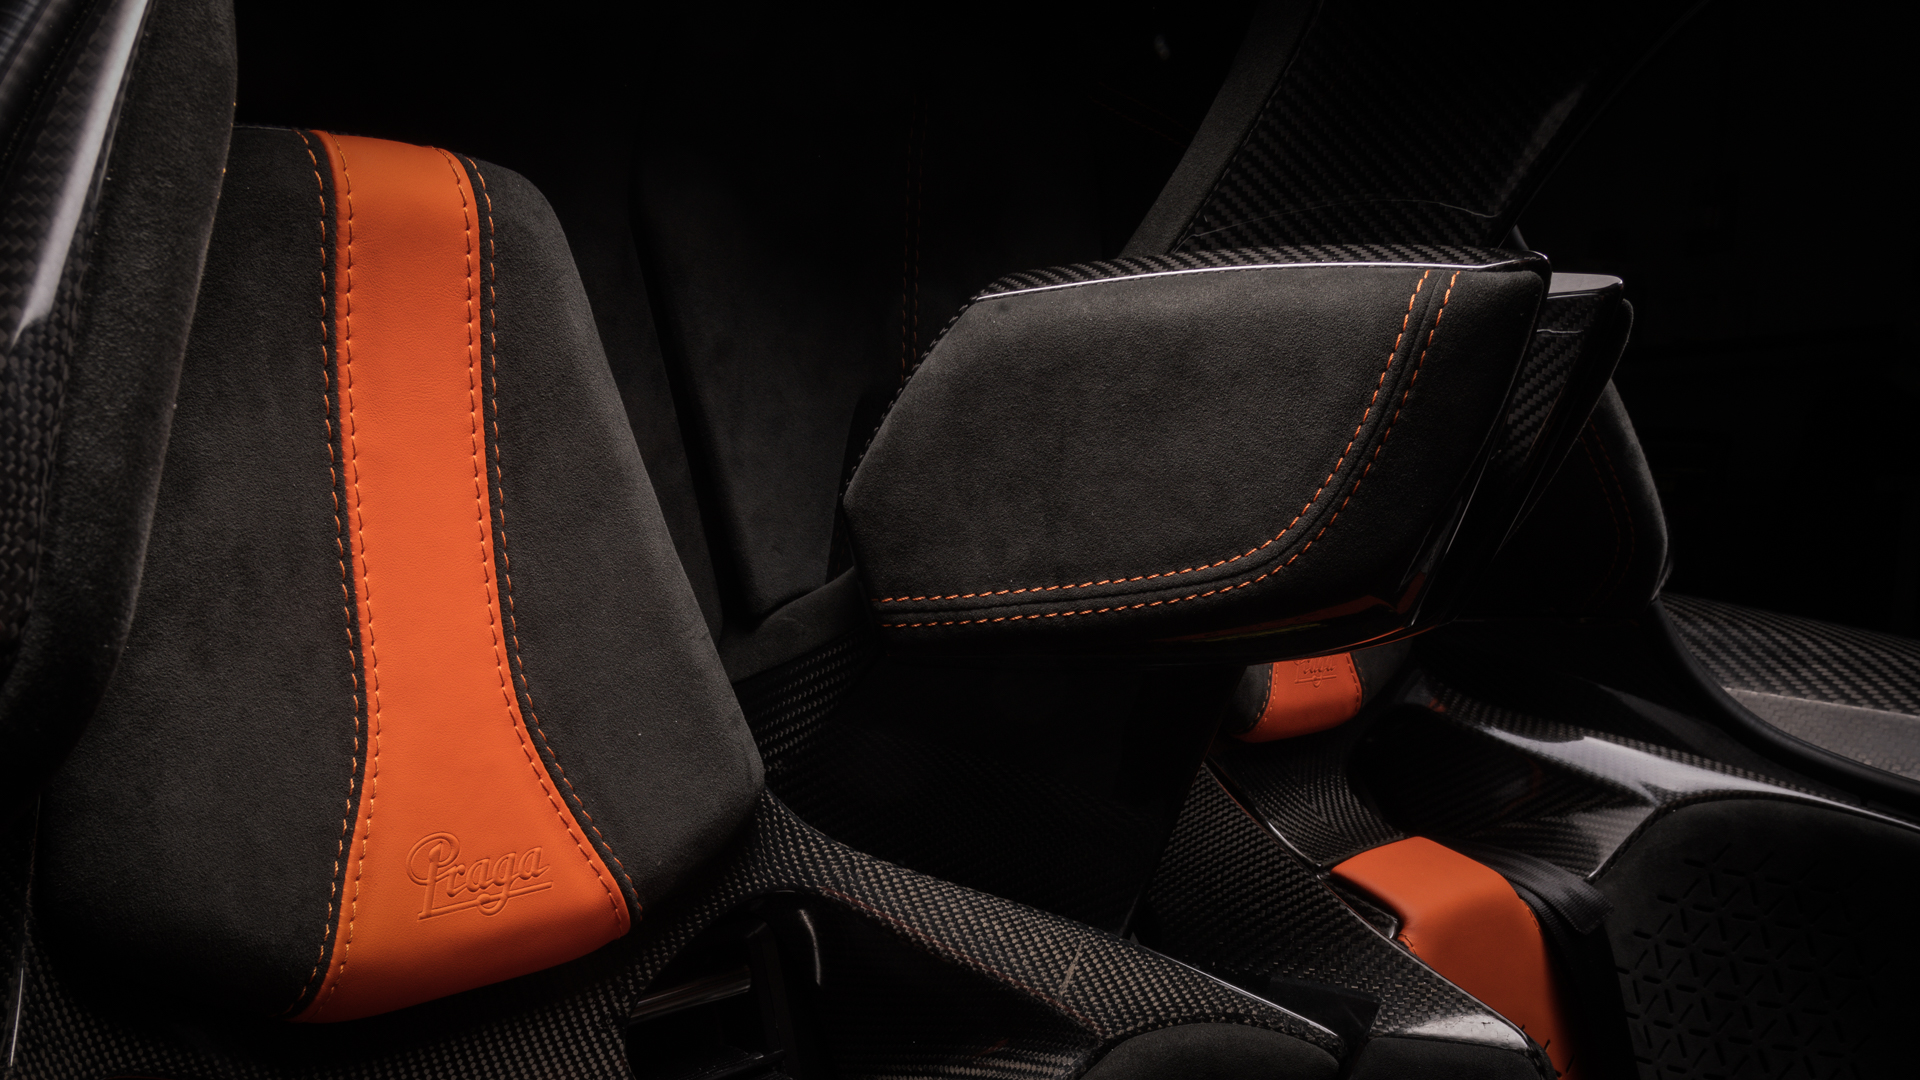 Genuine leather headrests with orange detail